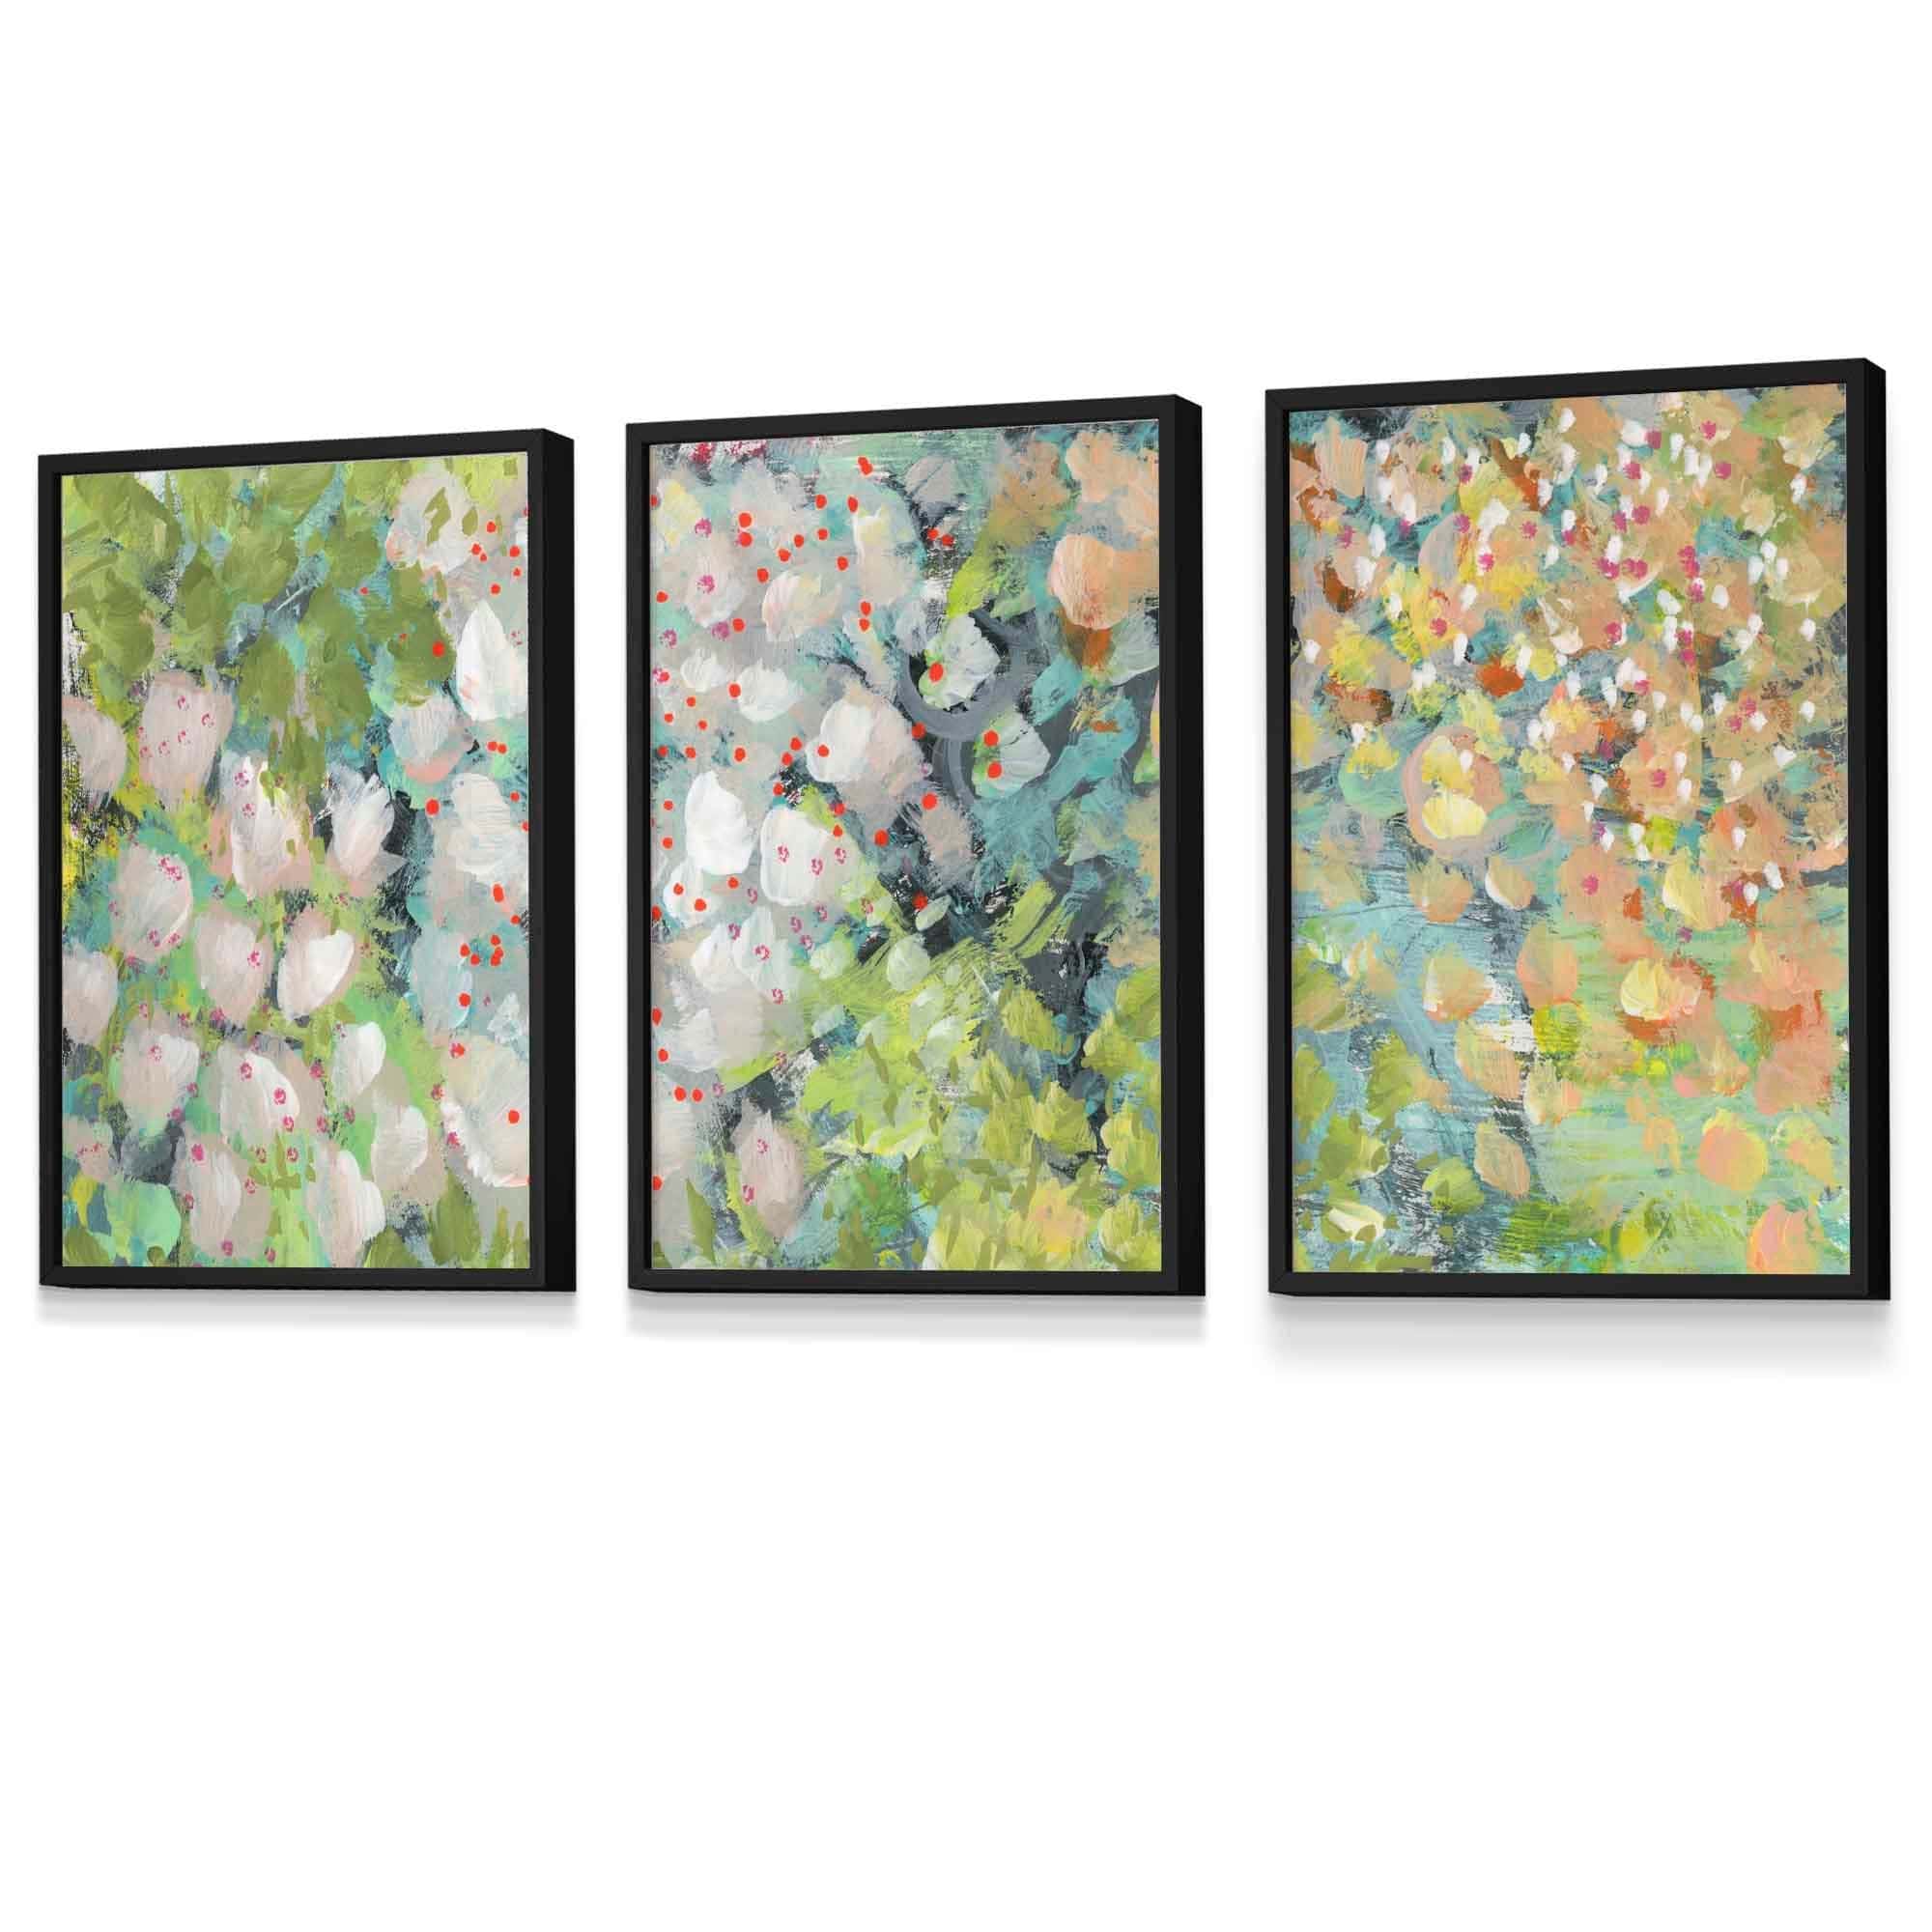 Set of 3 Framed Abstract Cottage Garden Flowers in Green Wall Art Prints | Artze Wall Art UK